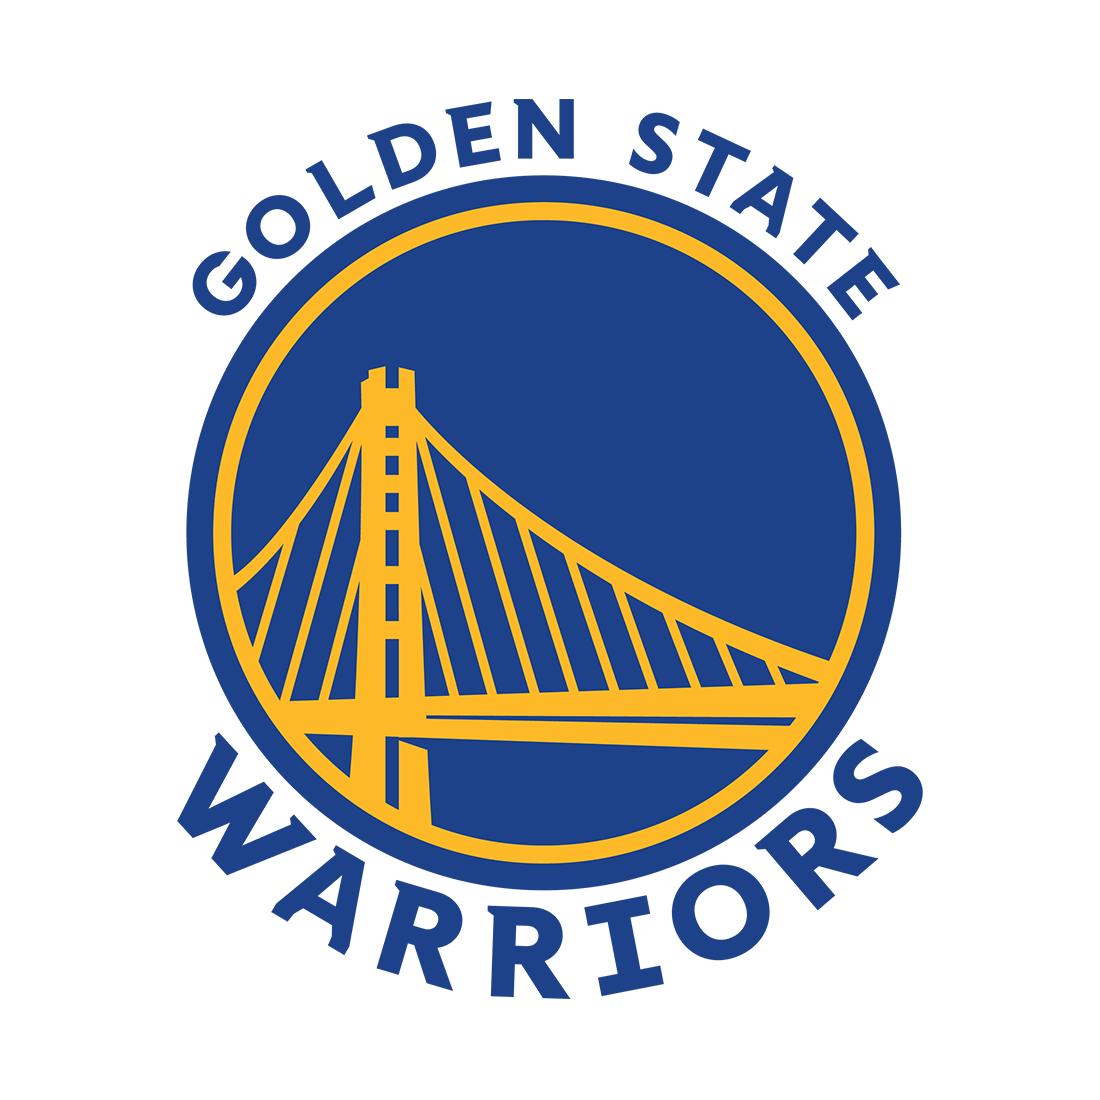 Golden State Warriors Télécharger limage PNG